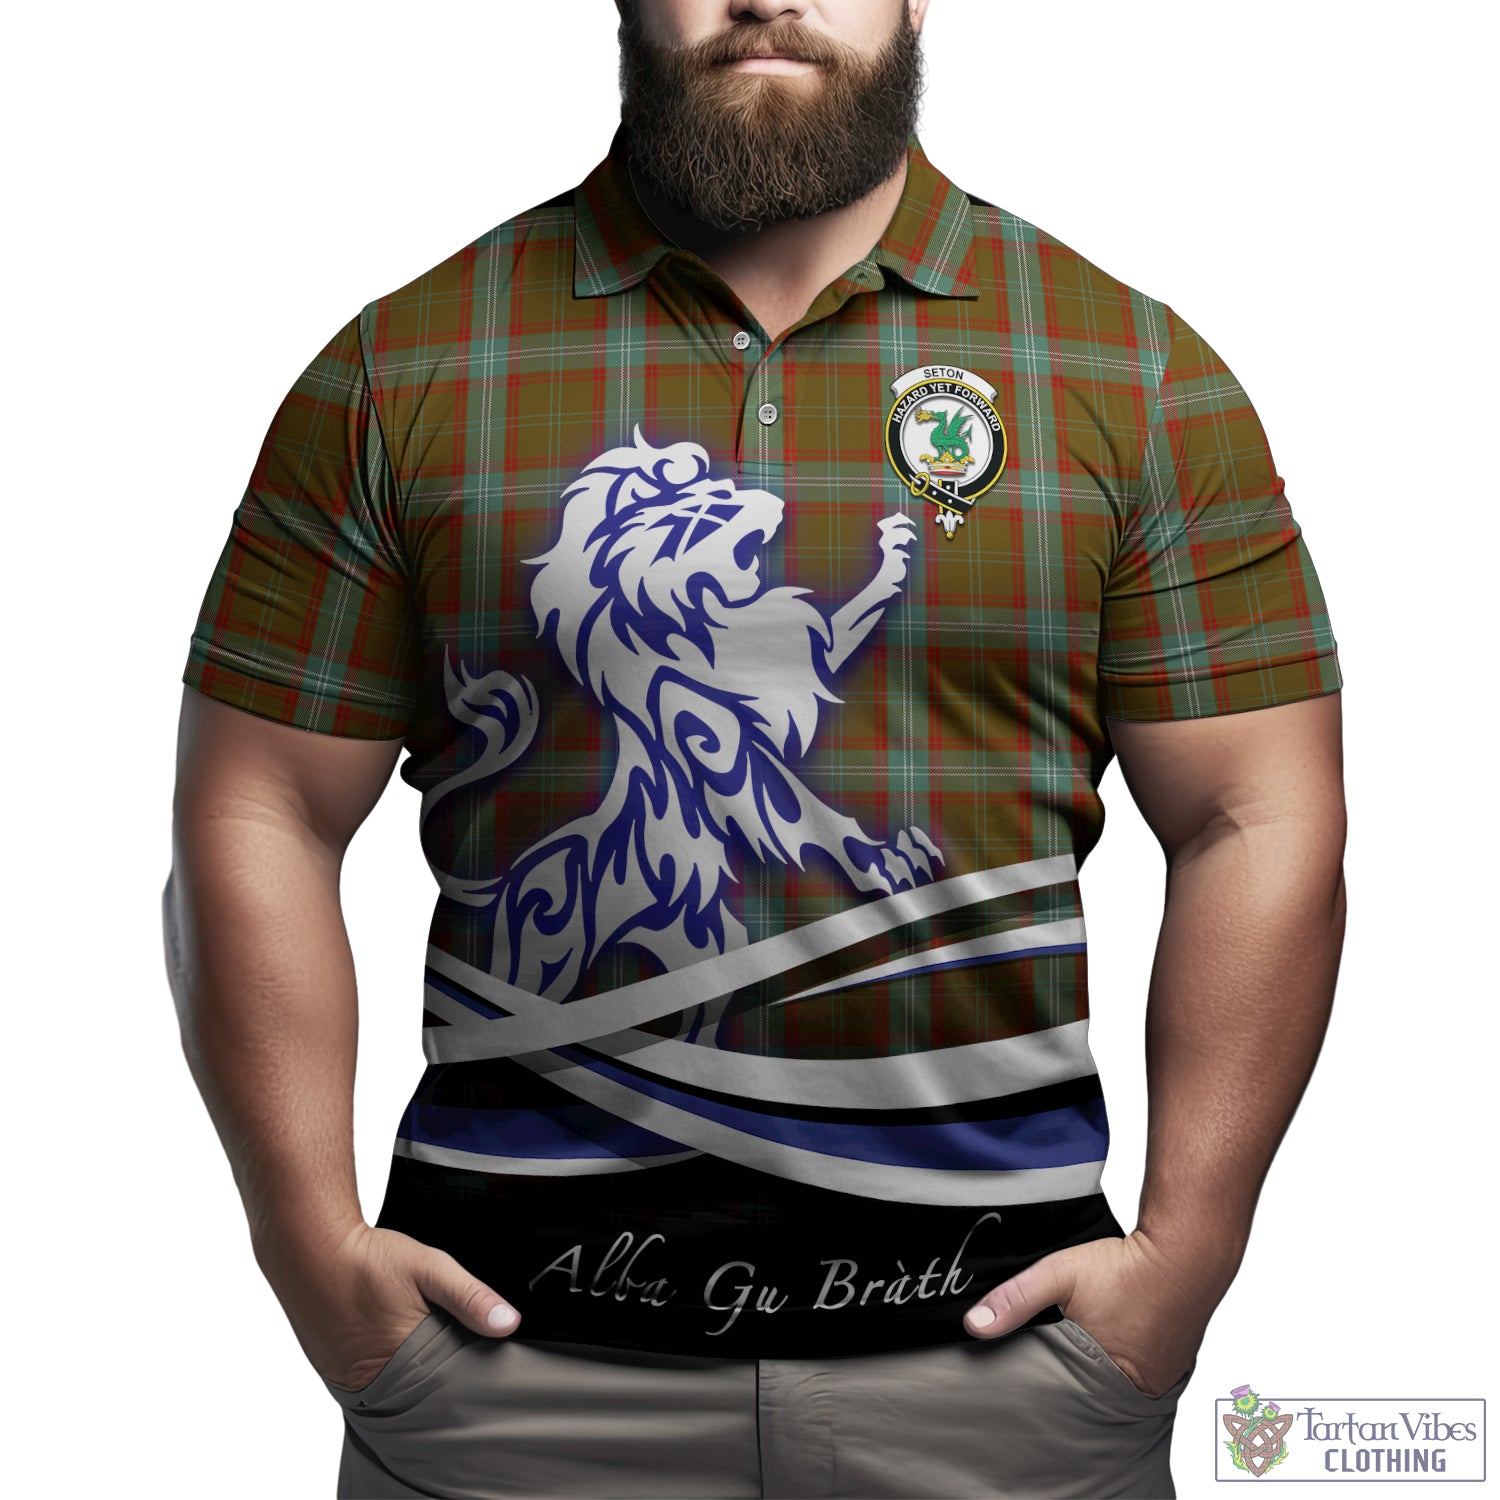 seton-hunting-tartan-polo-shirt-with-alba-gu-brath-regal-lion-emblem